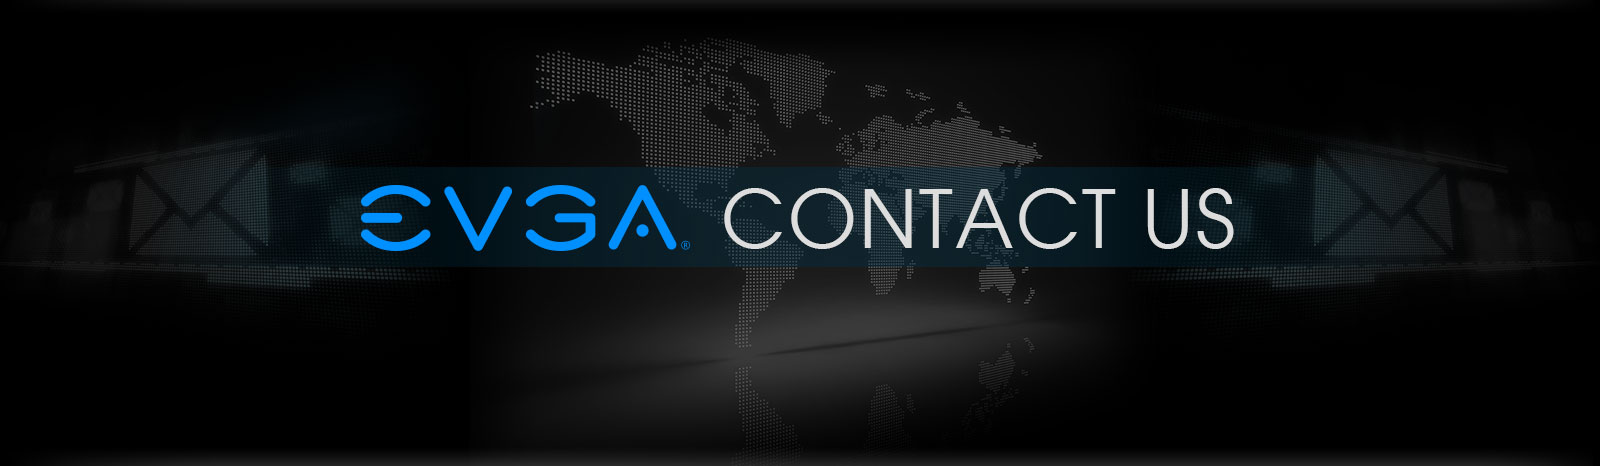 EVGA Contact Us